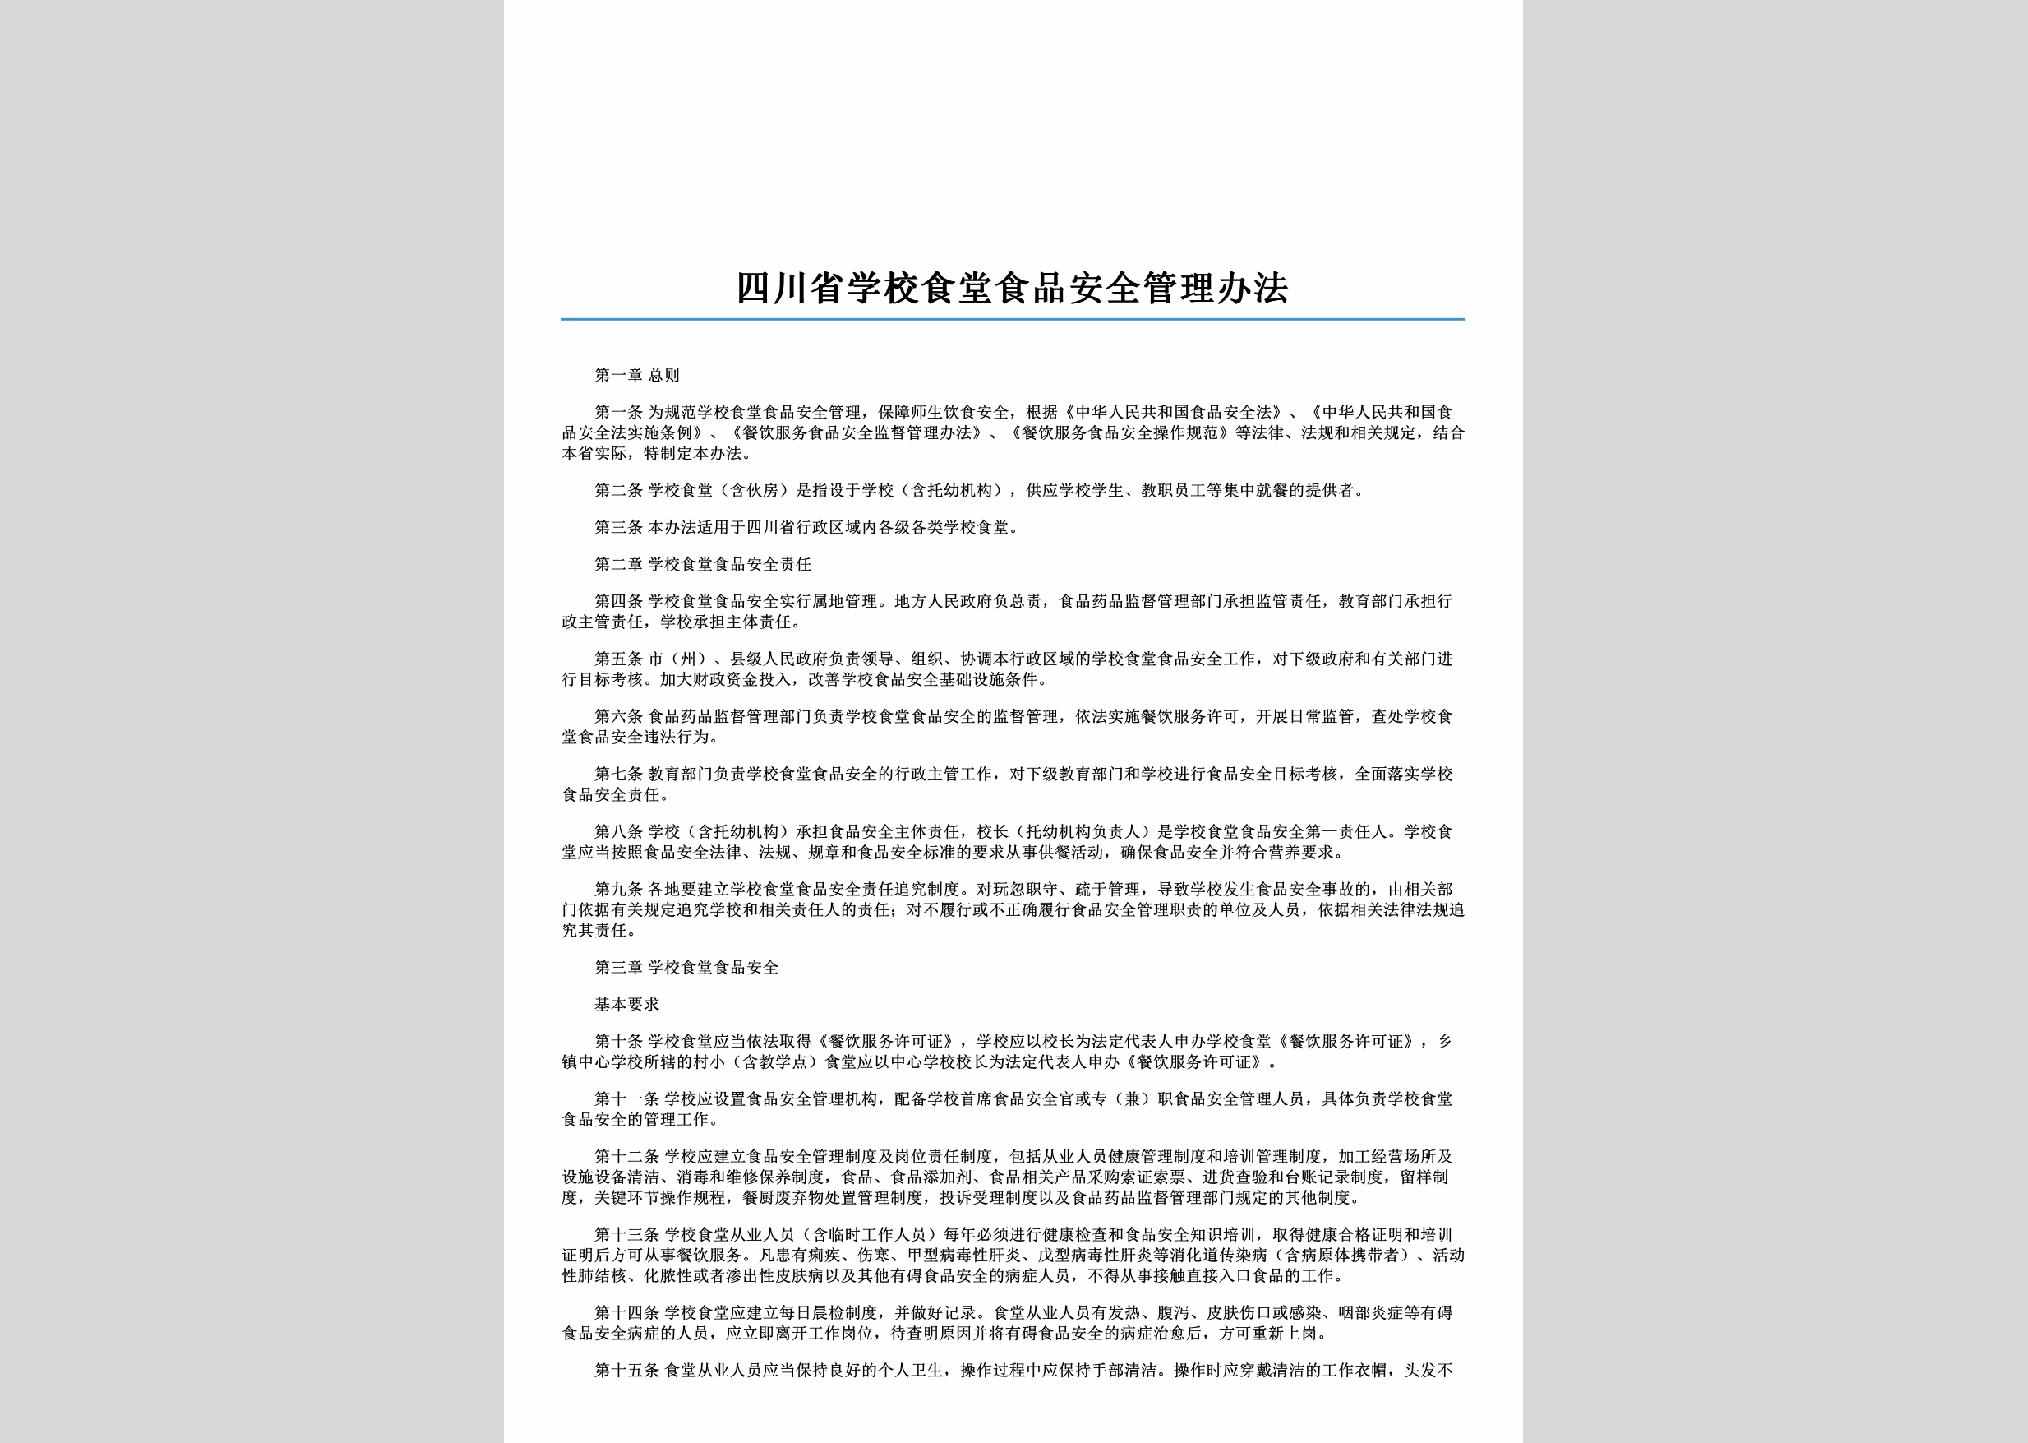 SC-XXSPGLBF-2014：四川省学校食堂食品安全管理办法